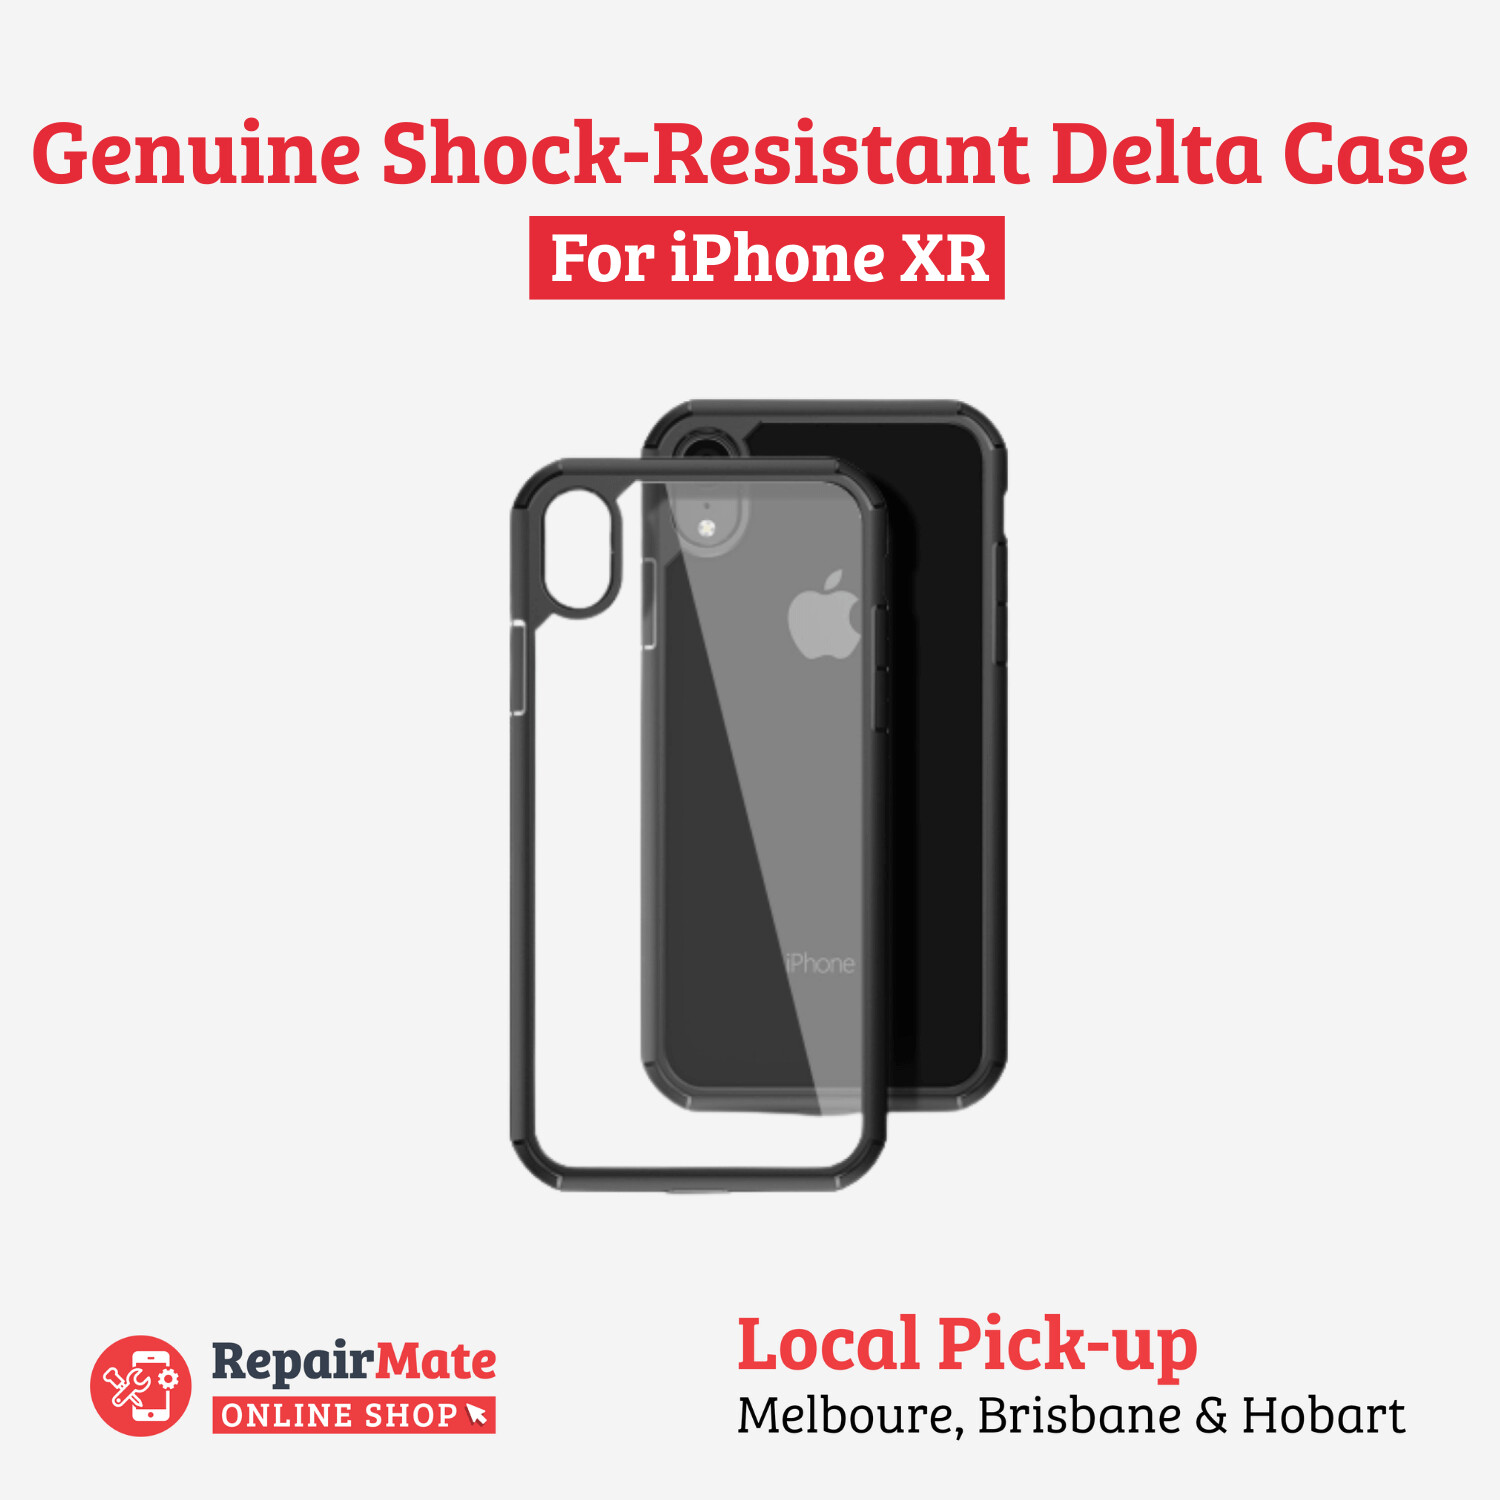 iPhone XR Genuine Shock-Resistant Delta Case